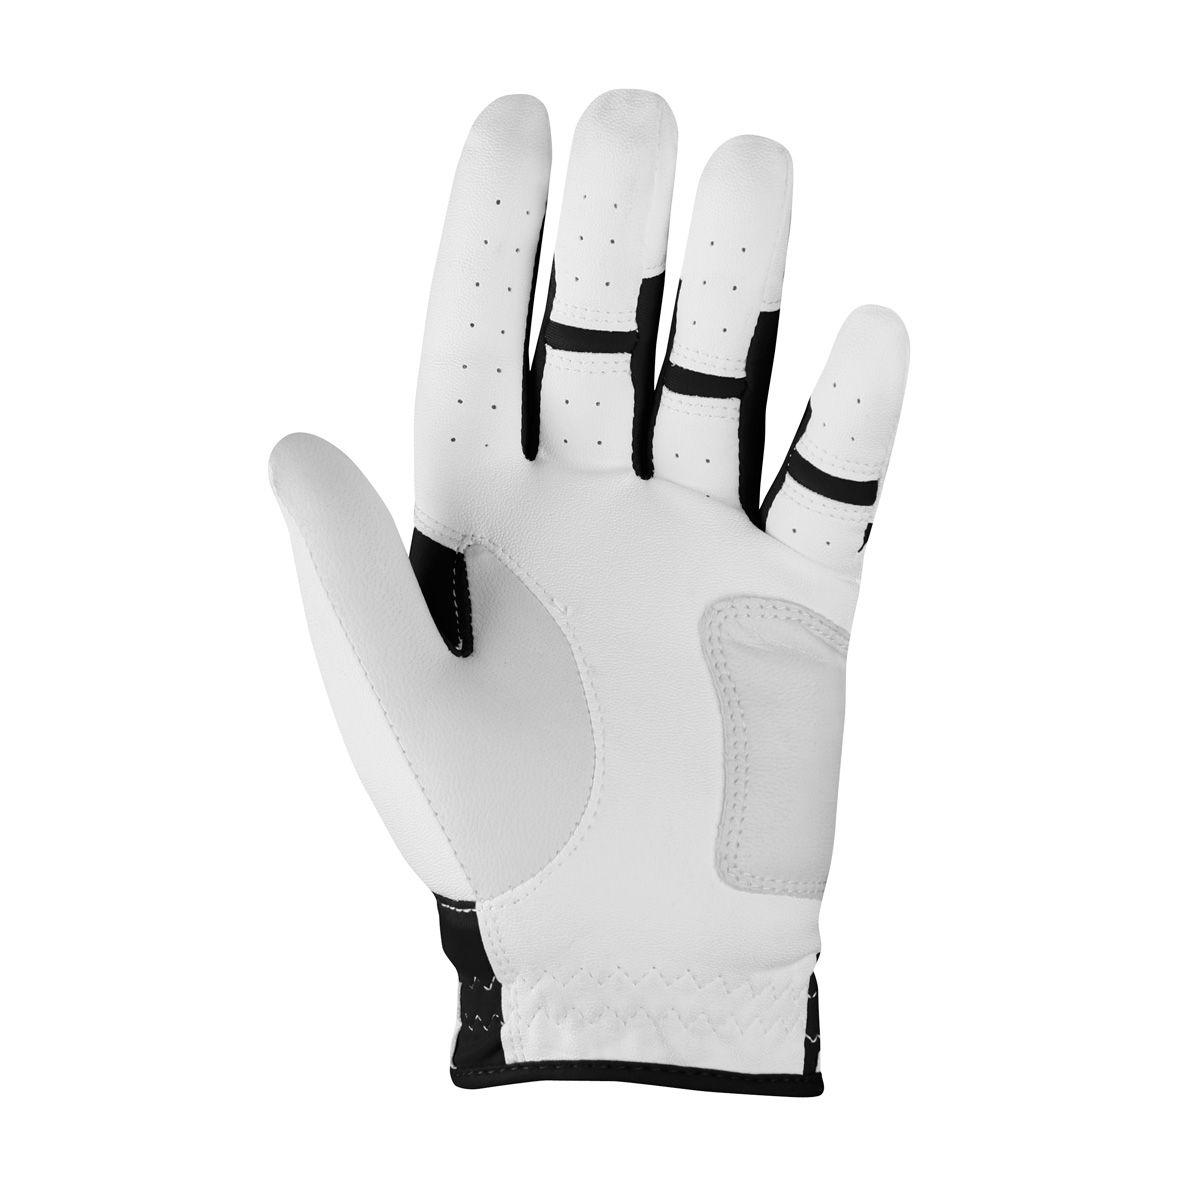 palm view of a white/black Intech Junior Golf Glove